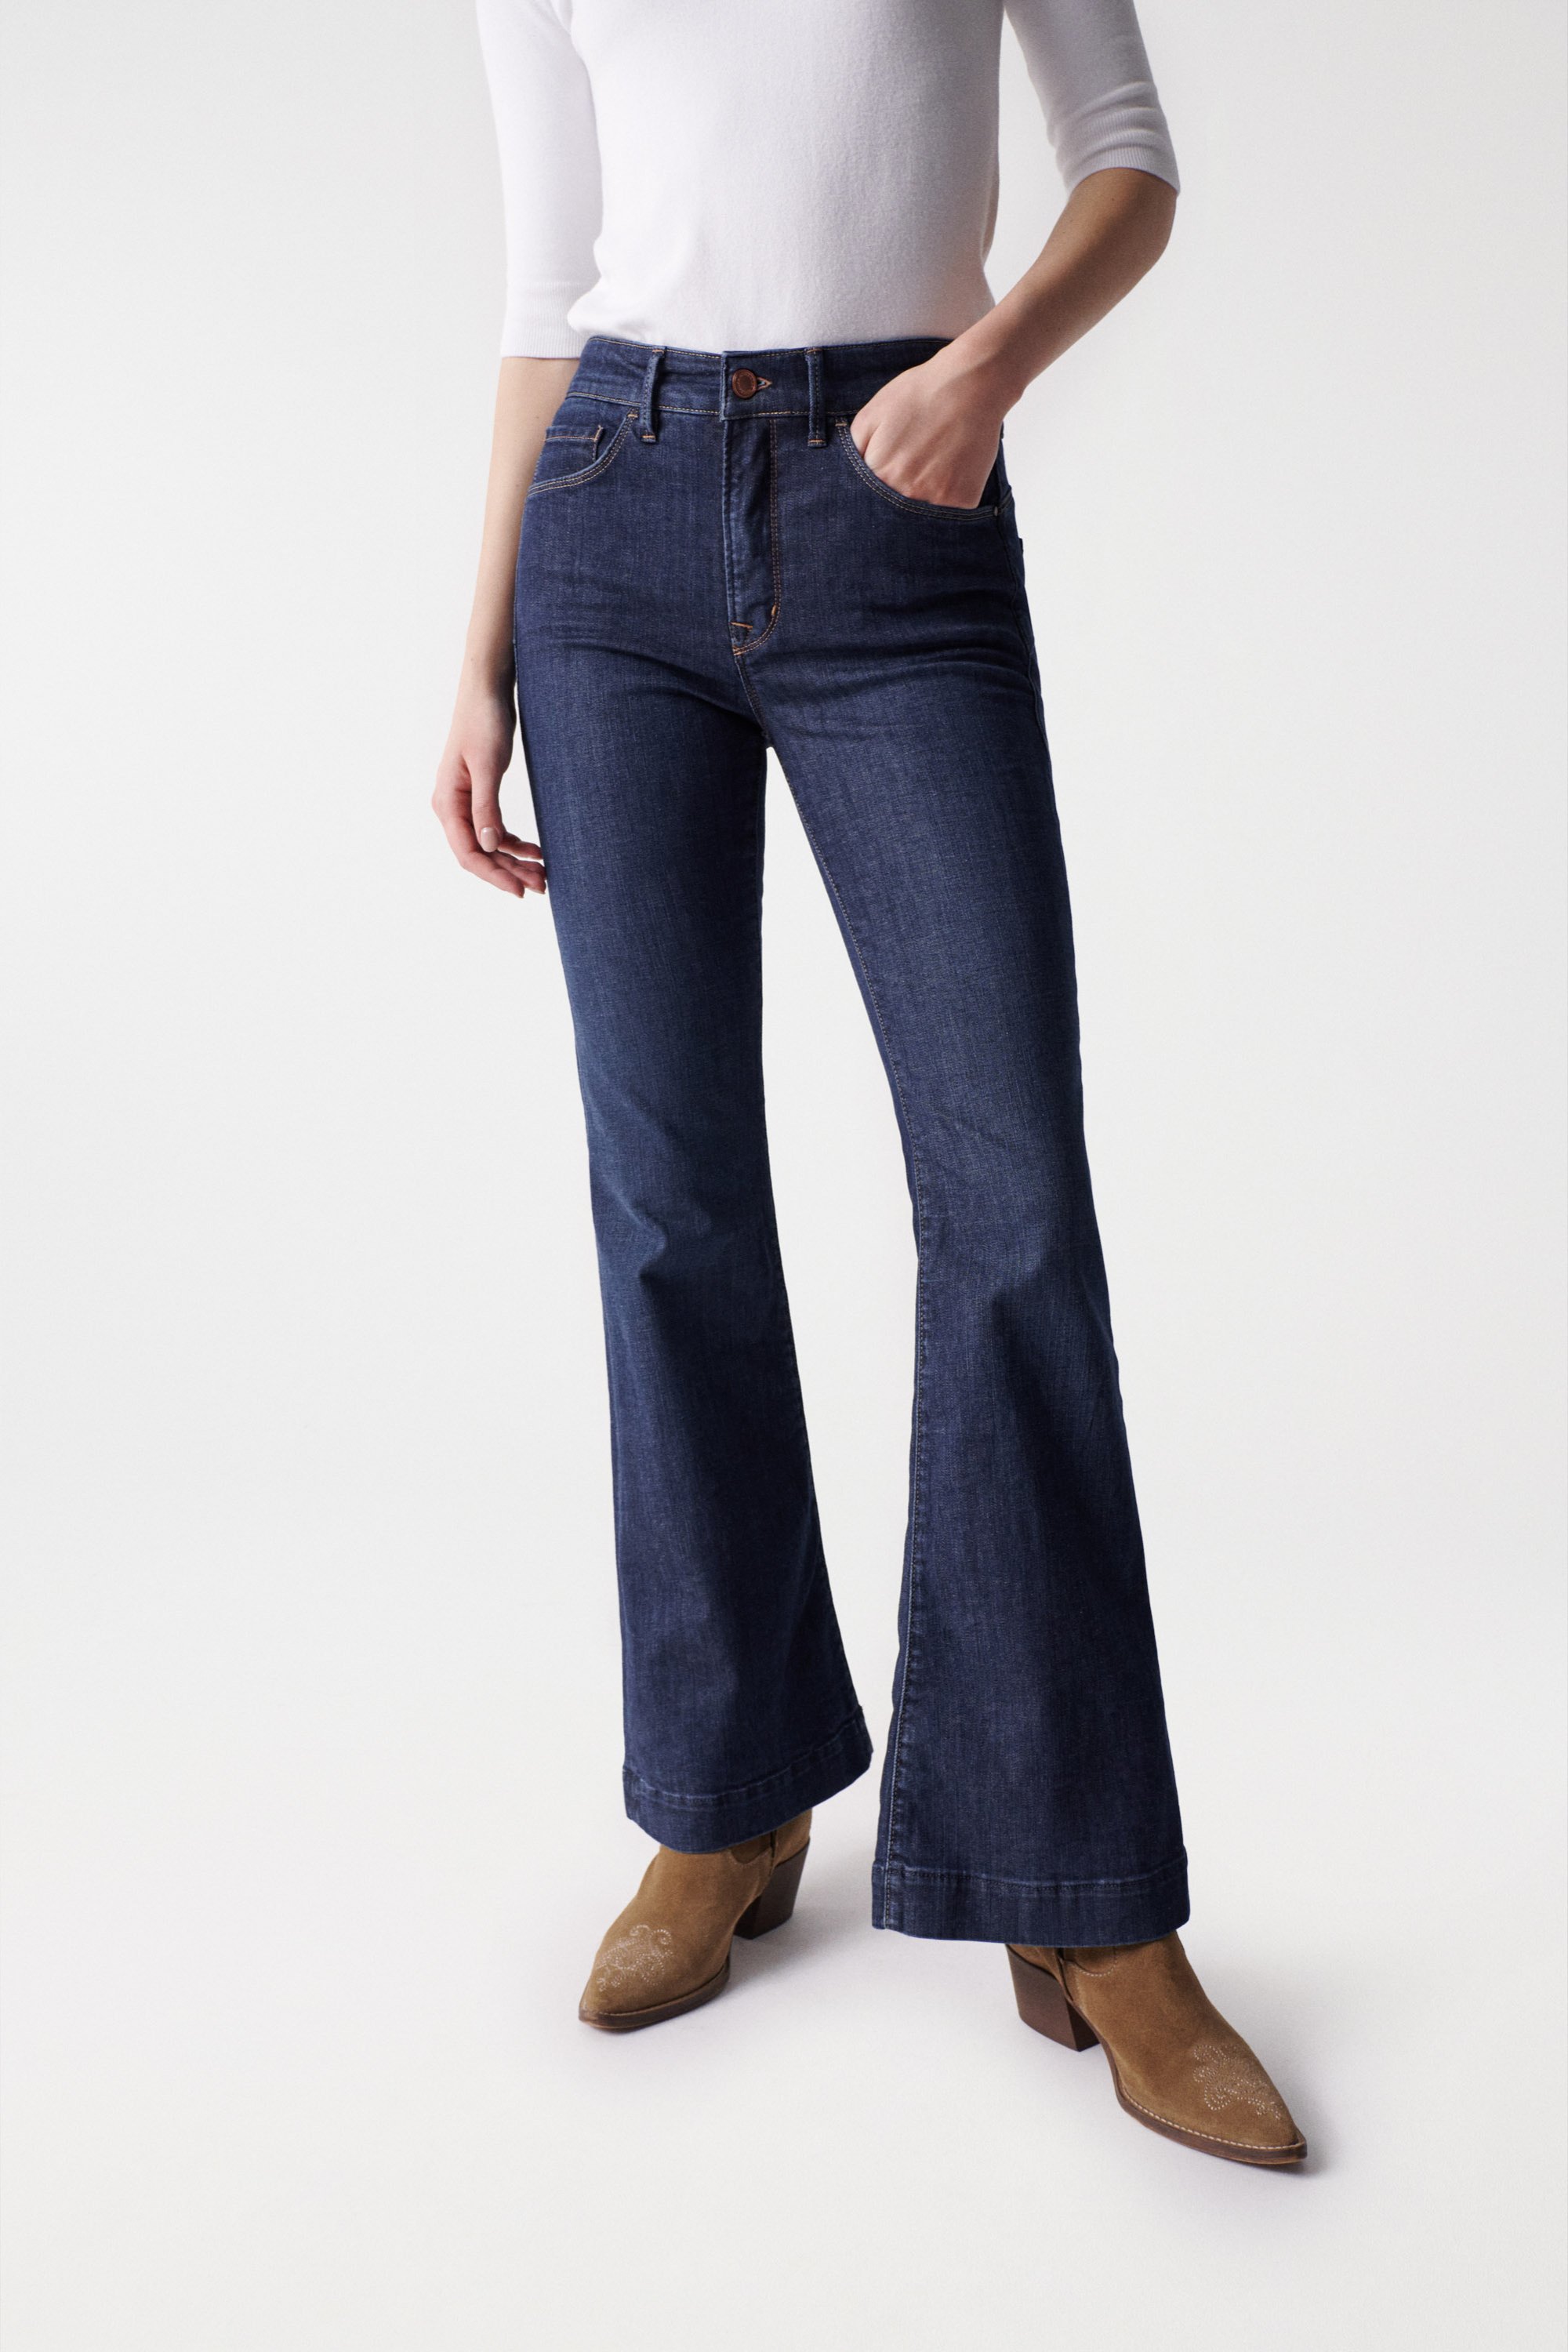 exprimir insalubre Disfraz high waisted flared jeans Servicio